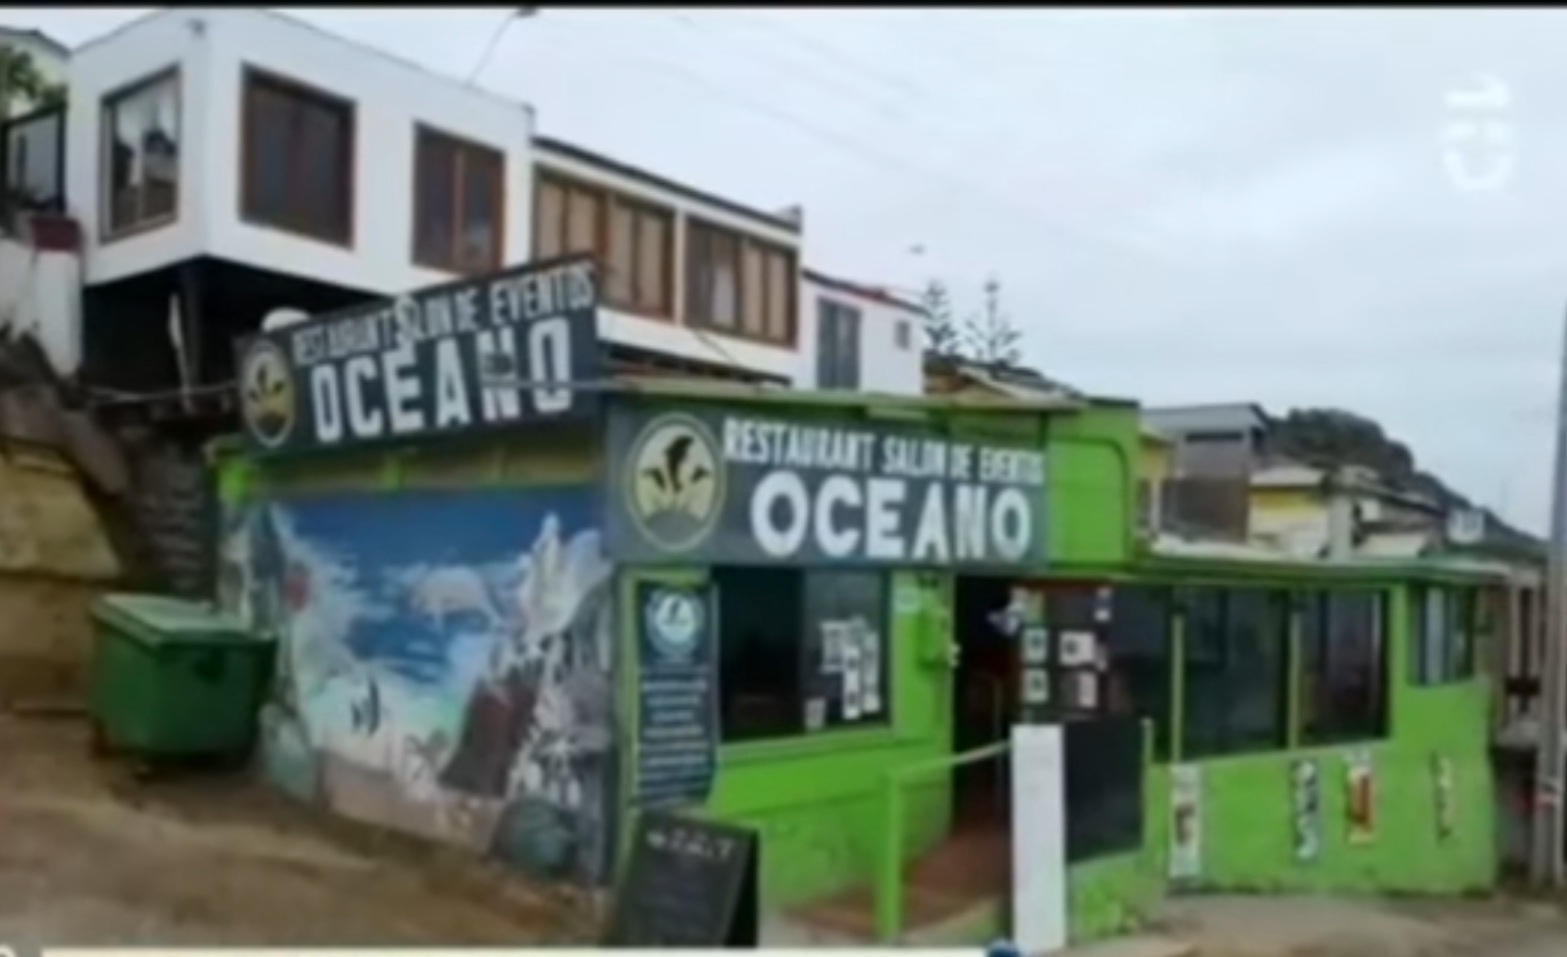 Restaurant Oceano